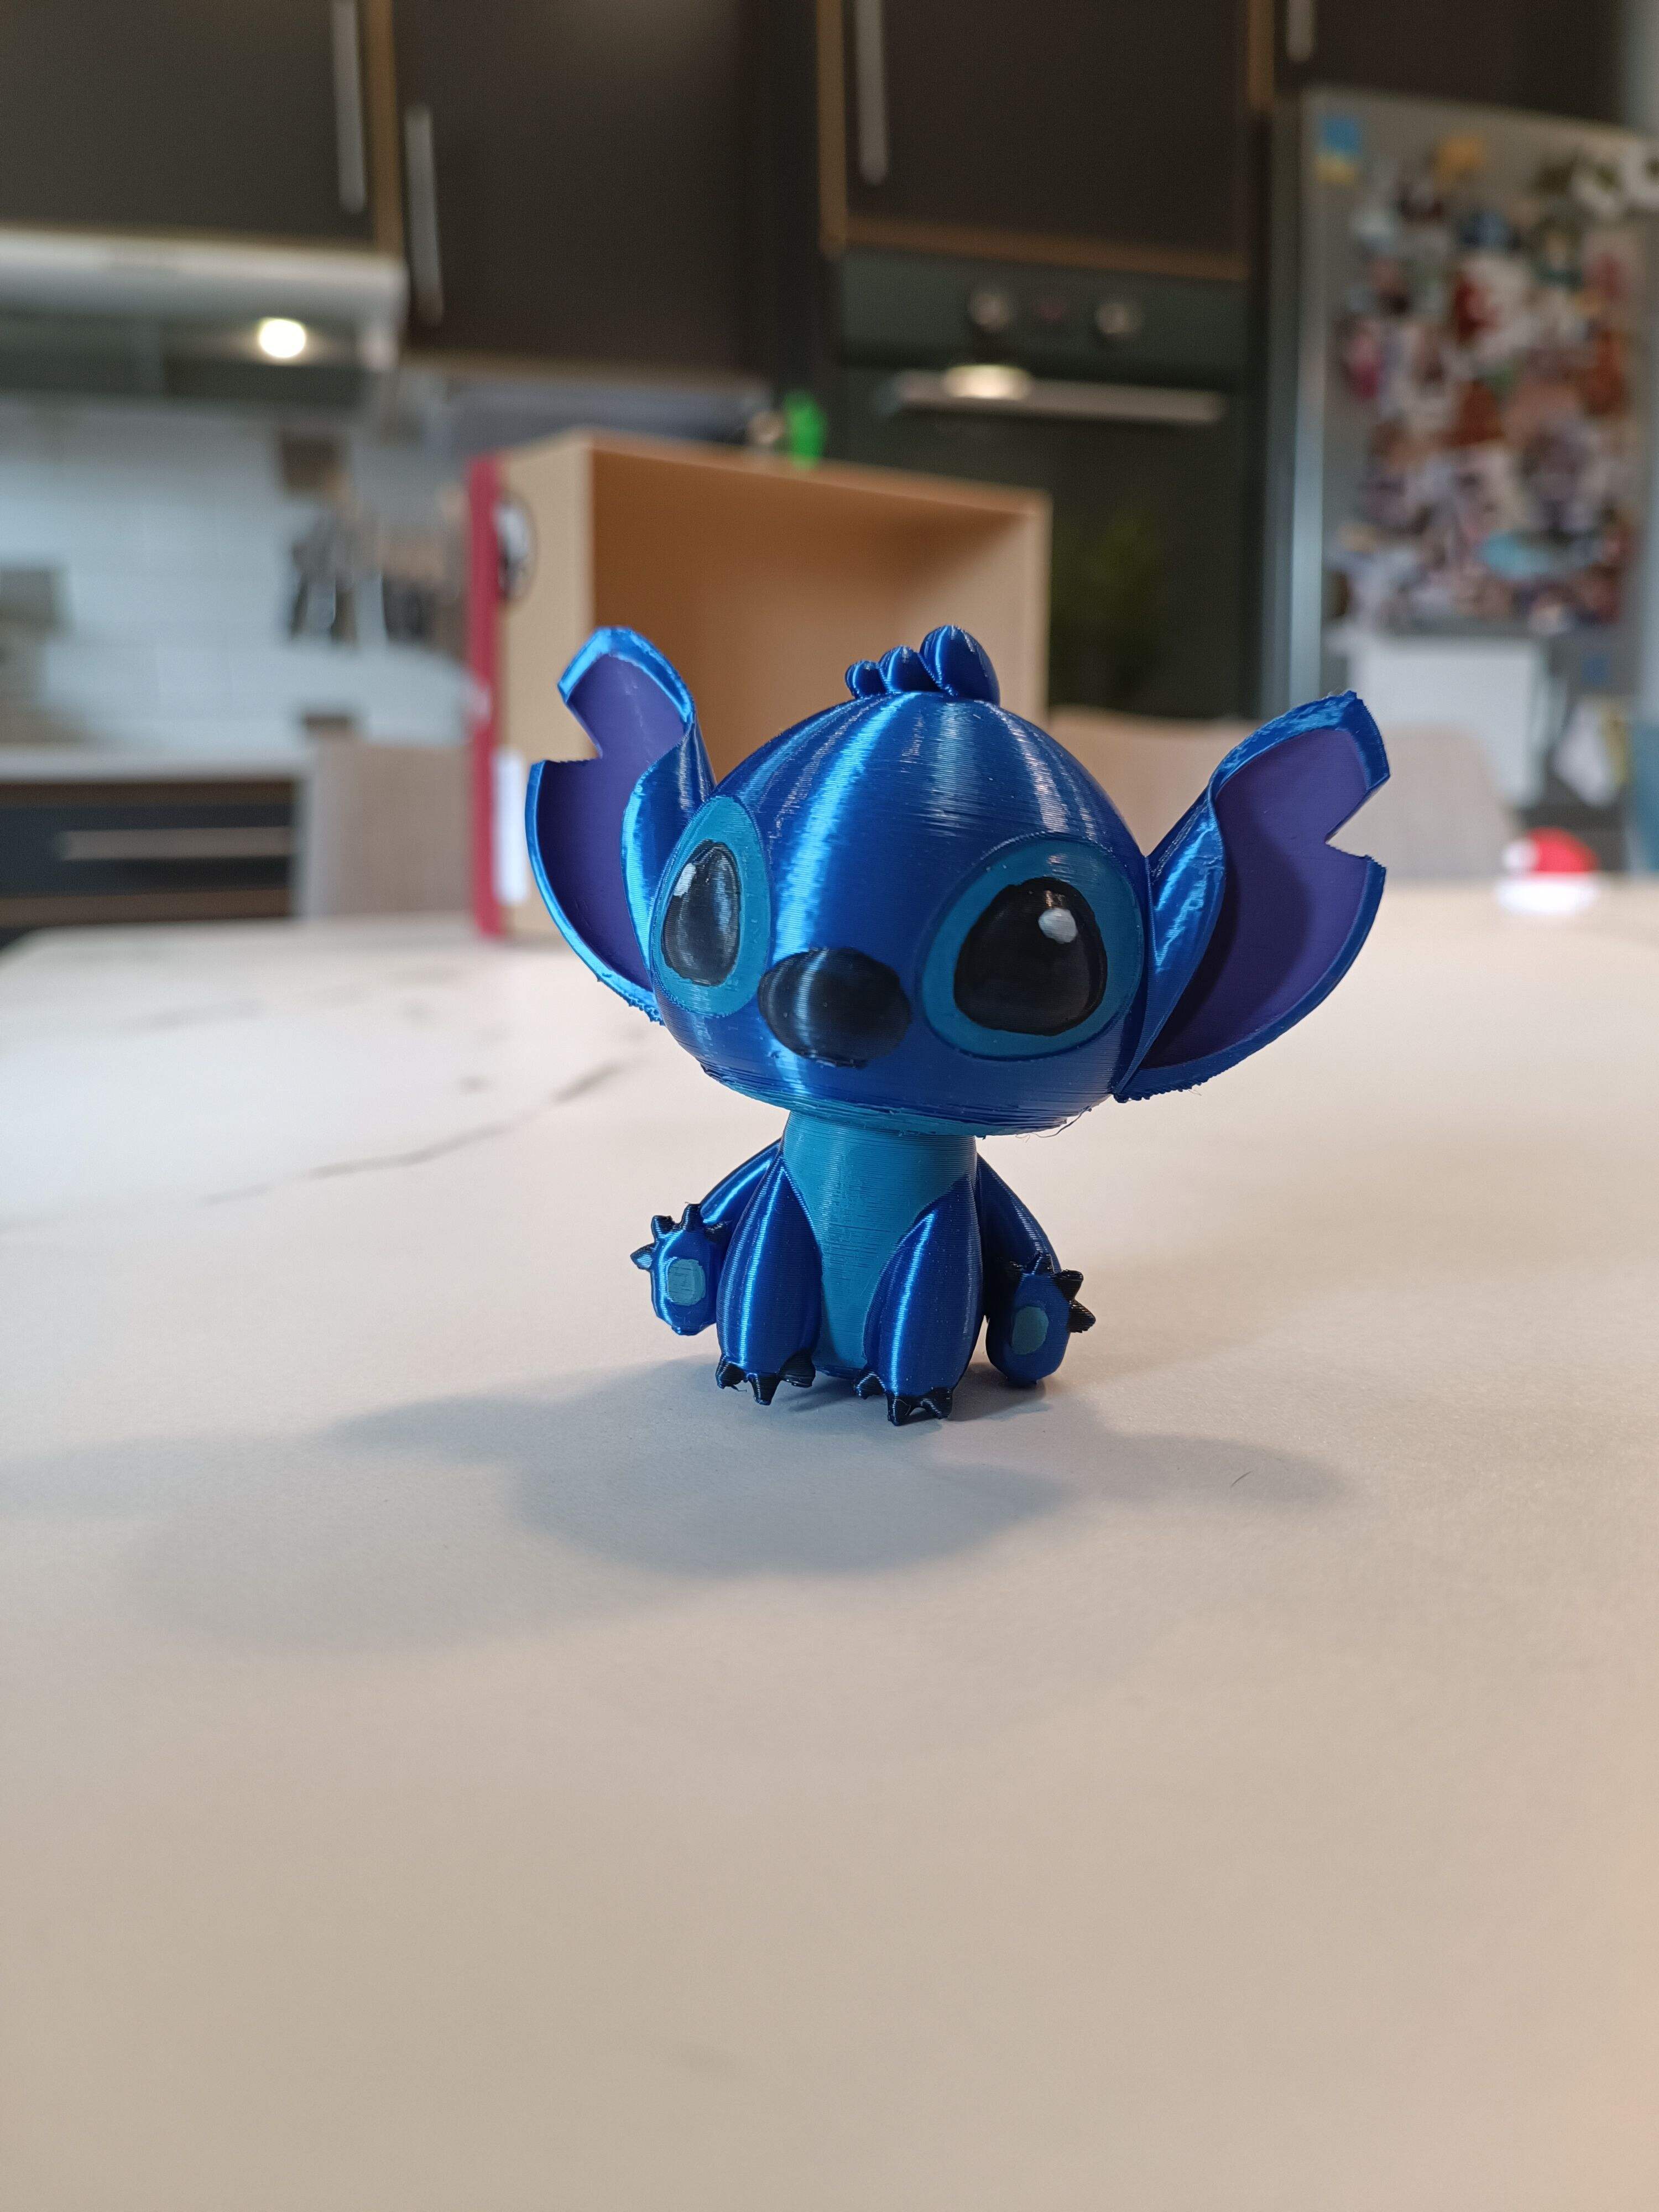 Stitch toy 3D model 3D printable